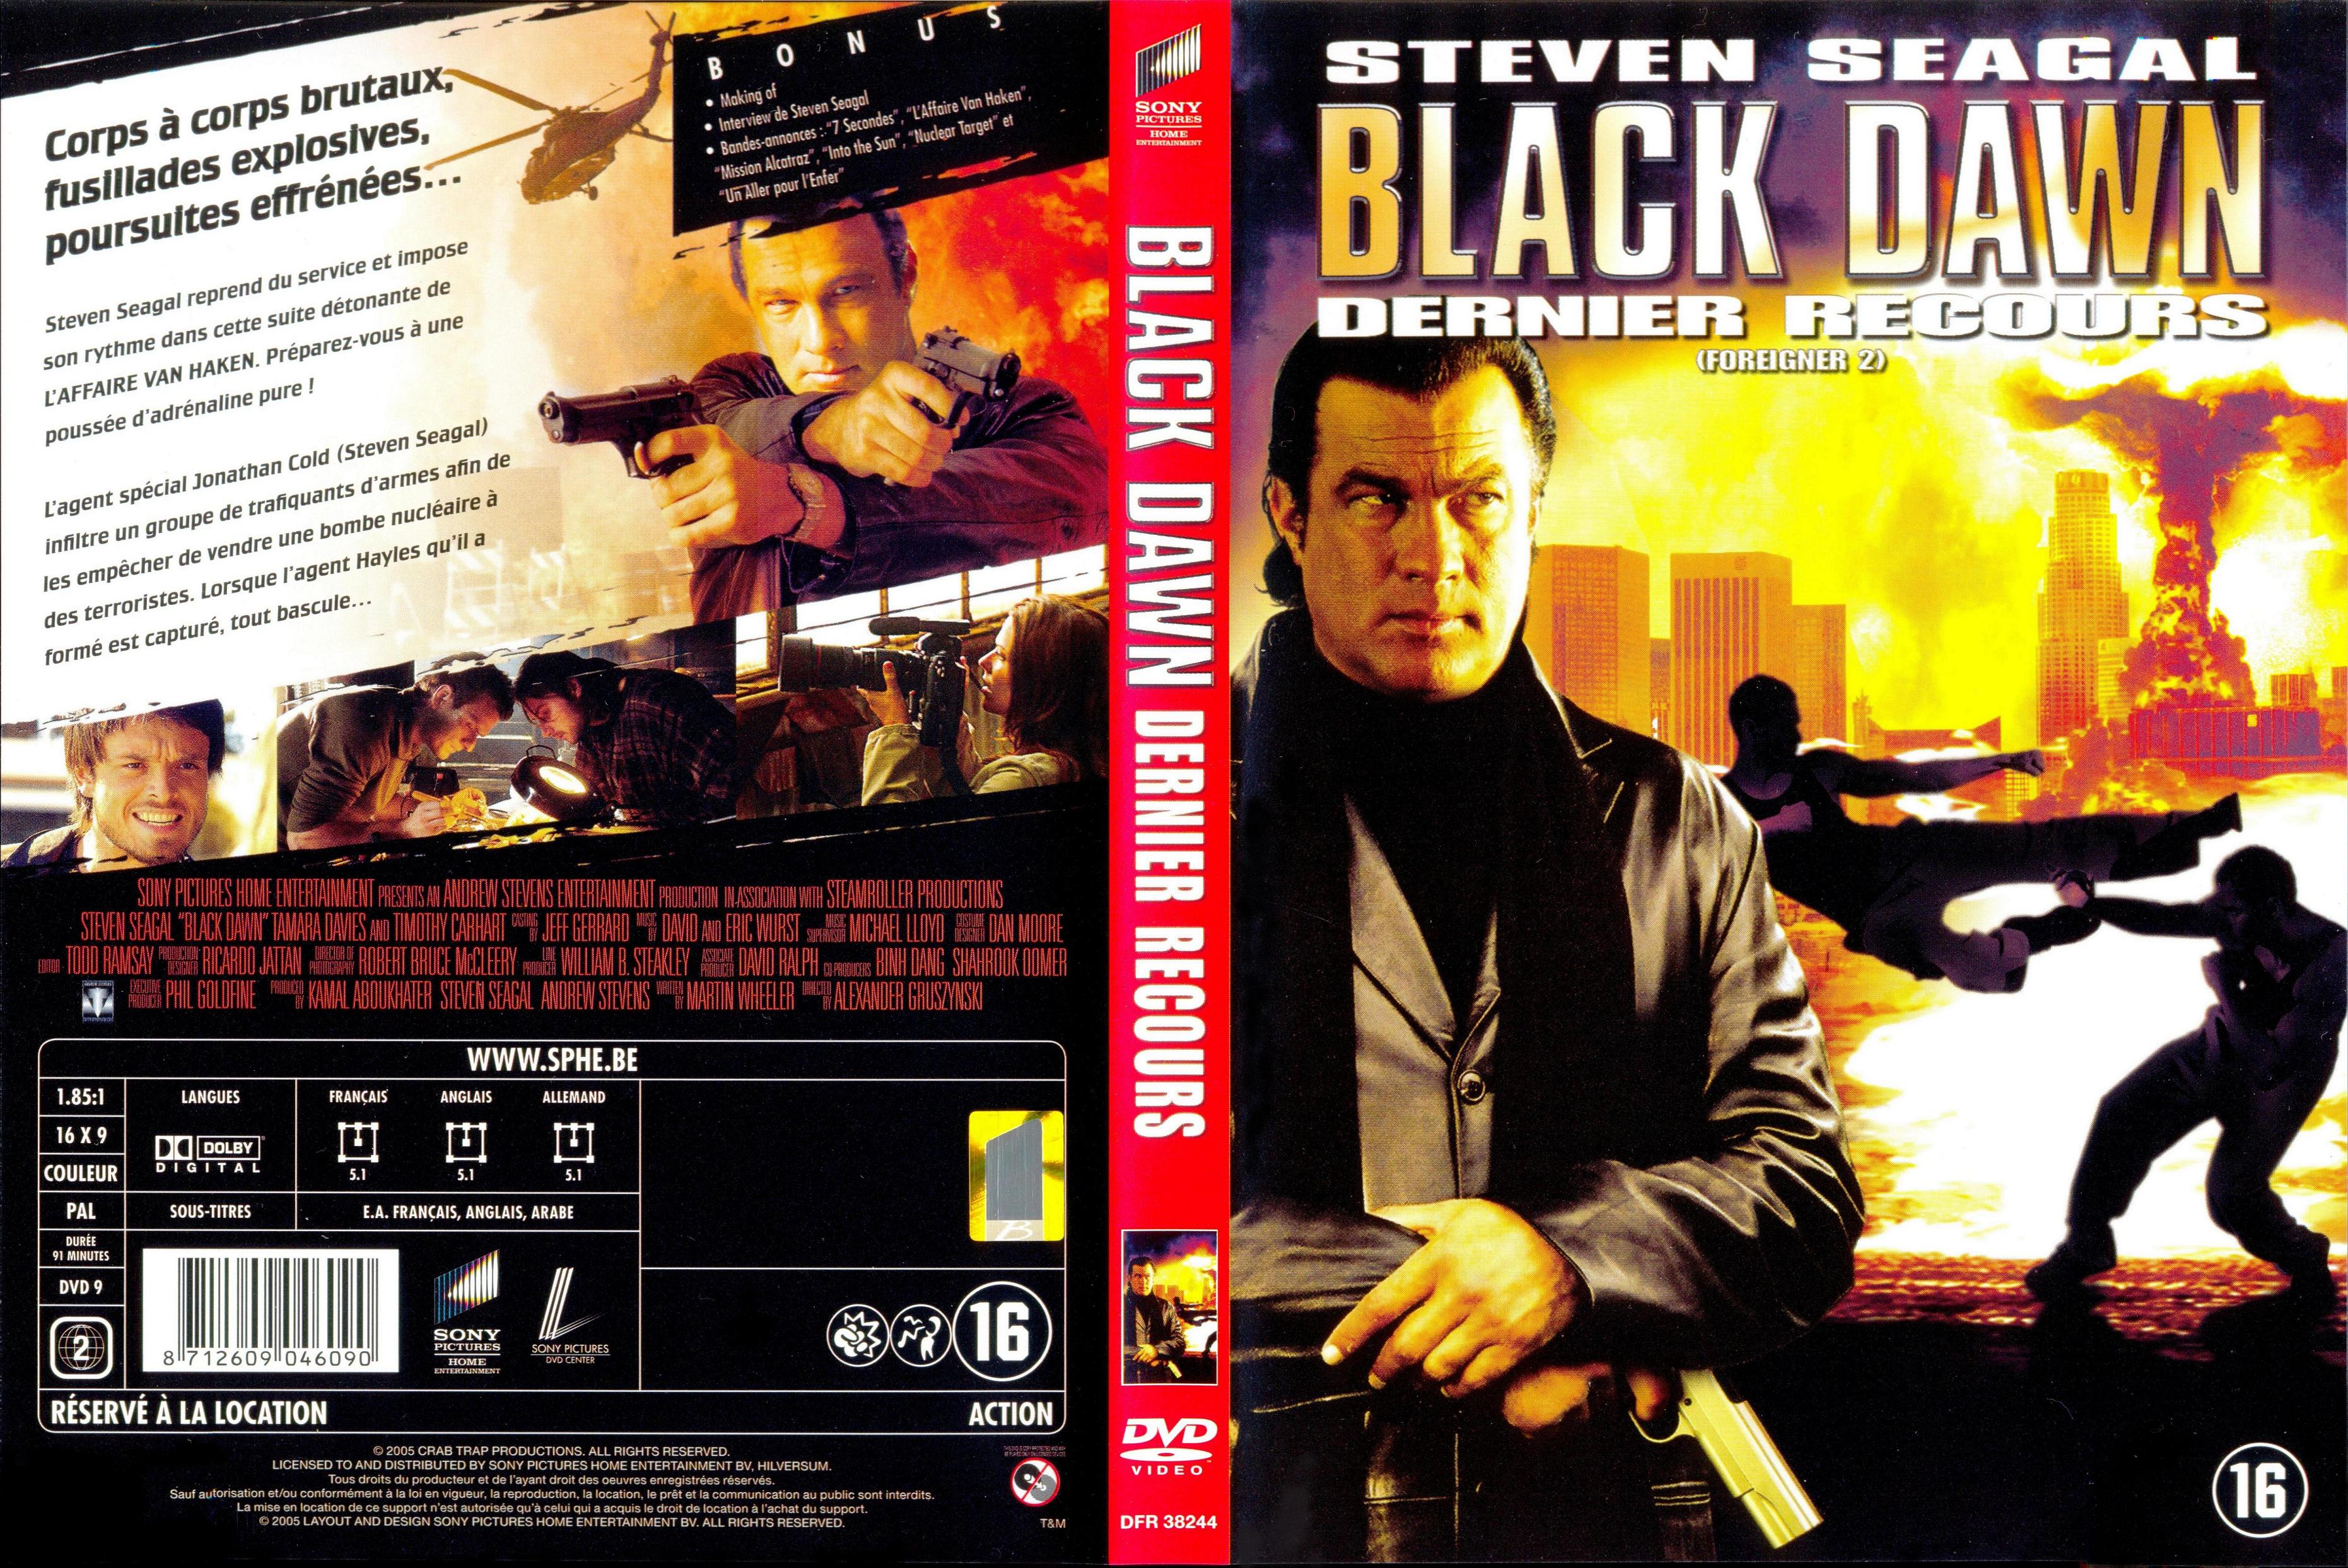 Jaquette DVD Black Dawn v2